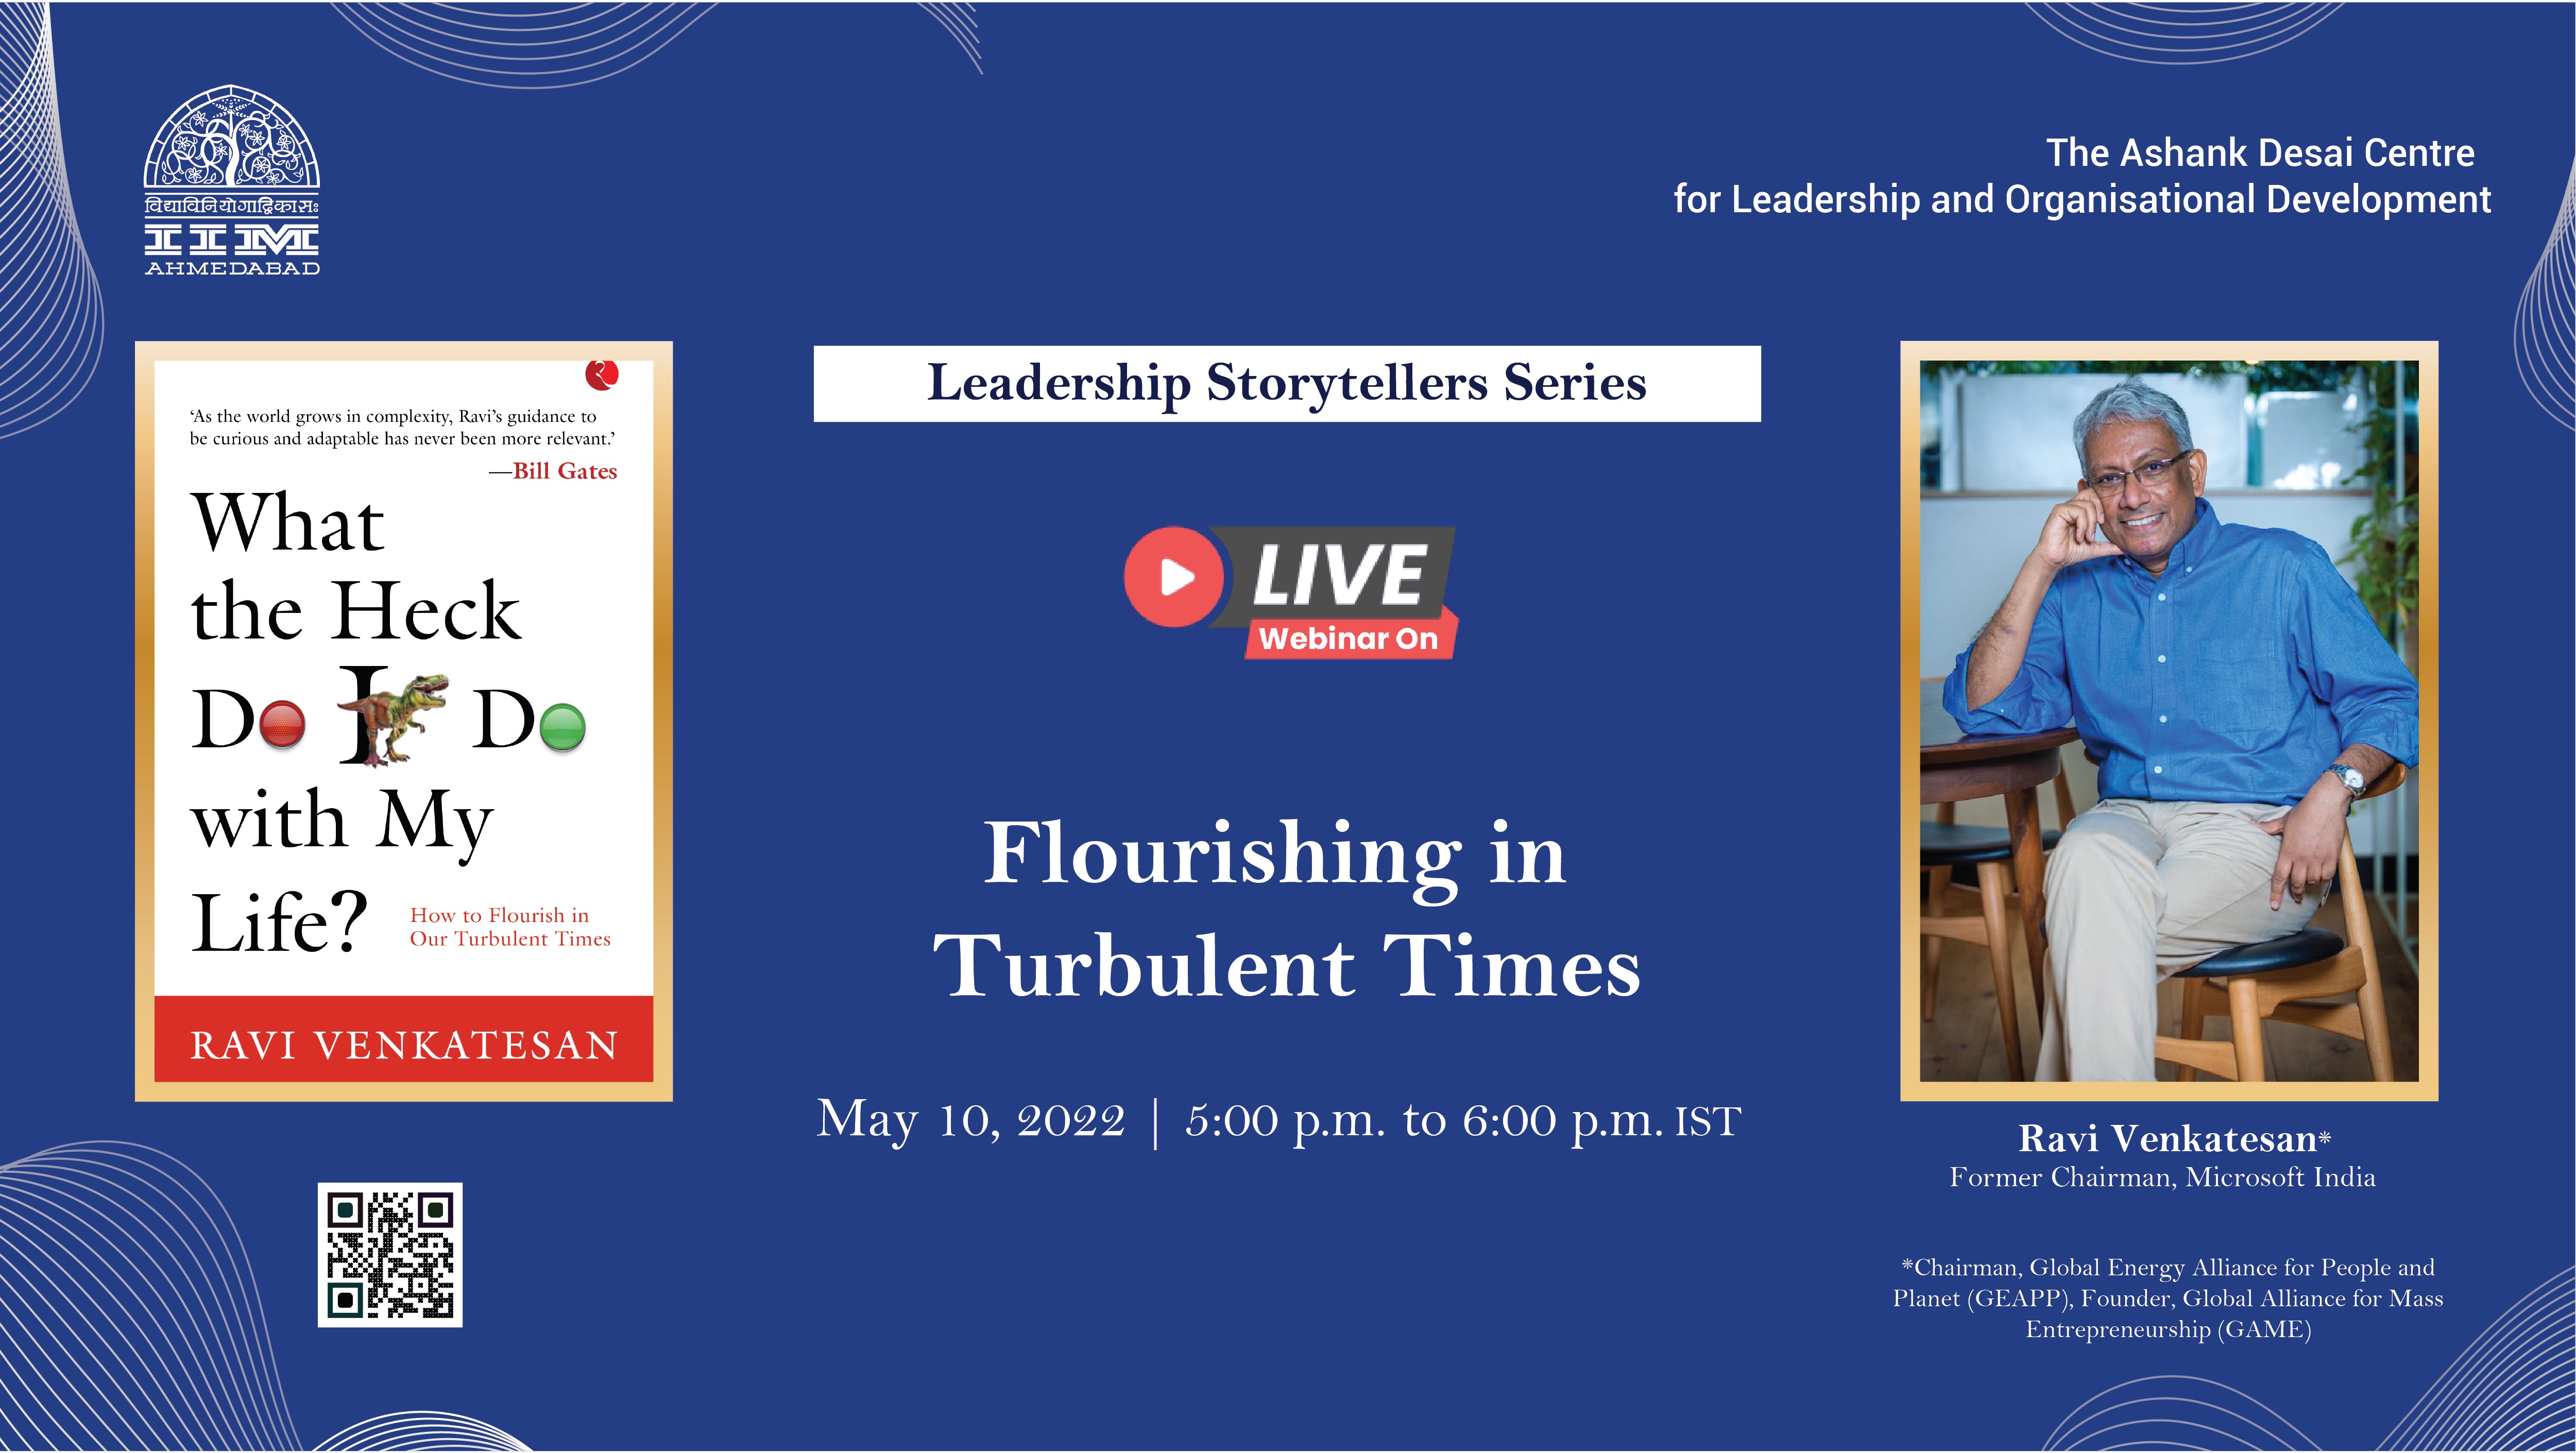 The Leadership Storytellers Series on “Flourishing in Turbulent Times”